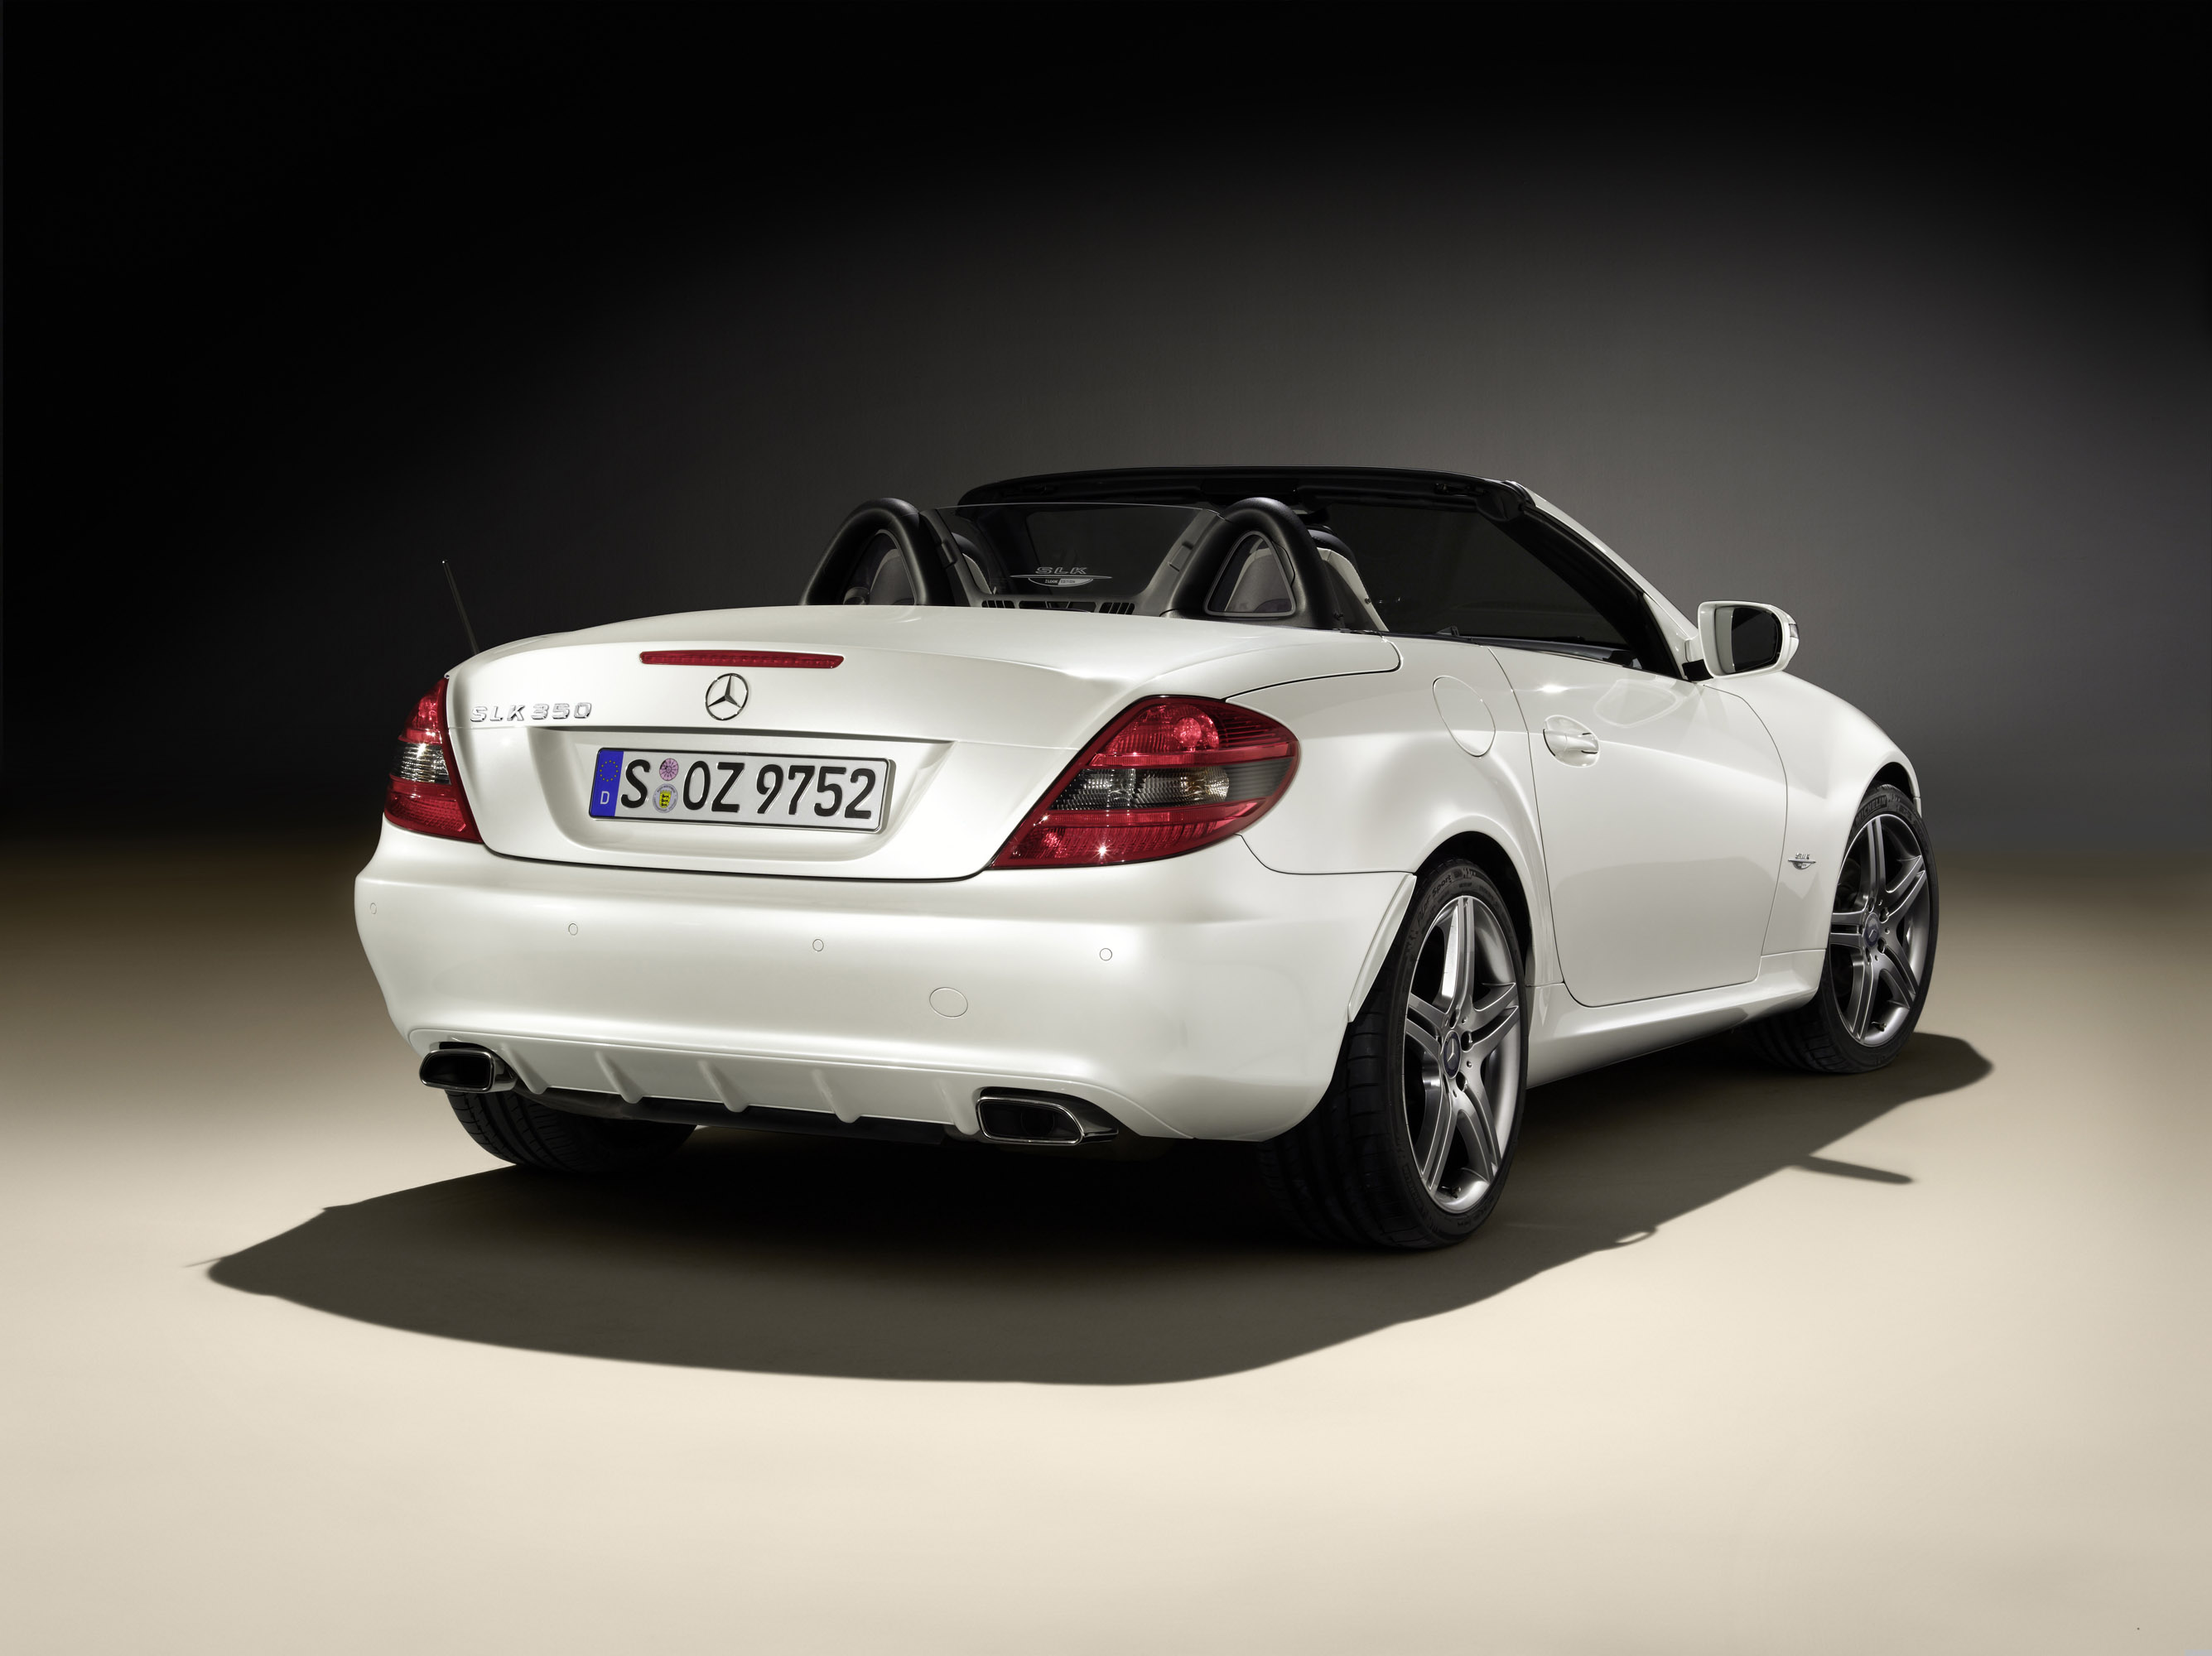 Mercedes-Benz SLK 2LOOK Edition